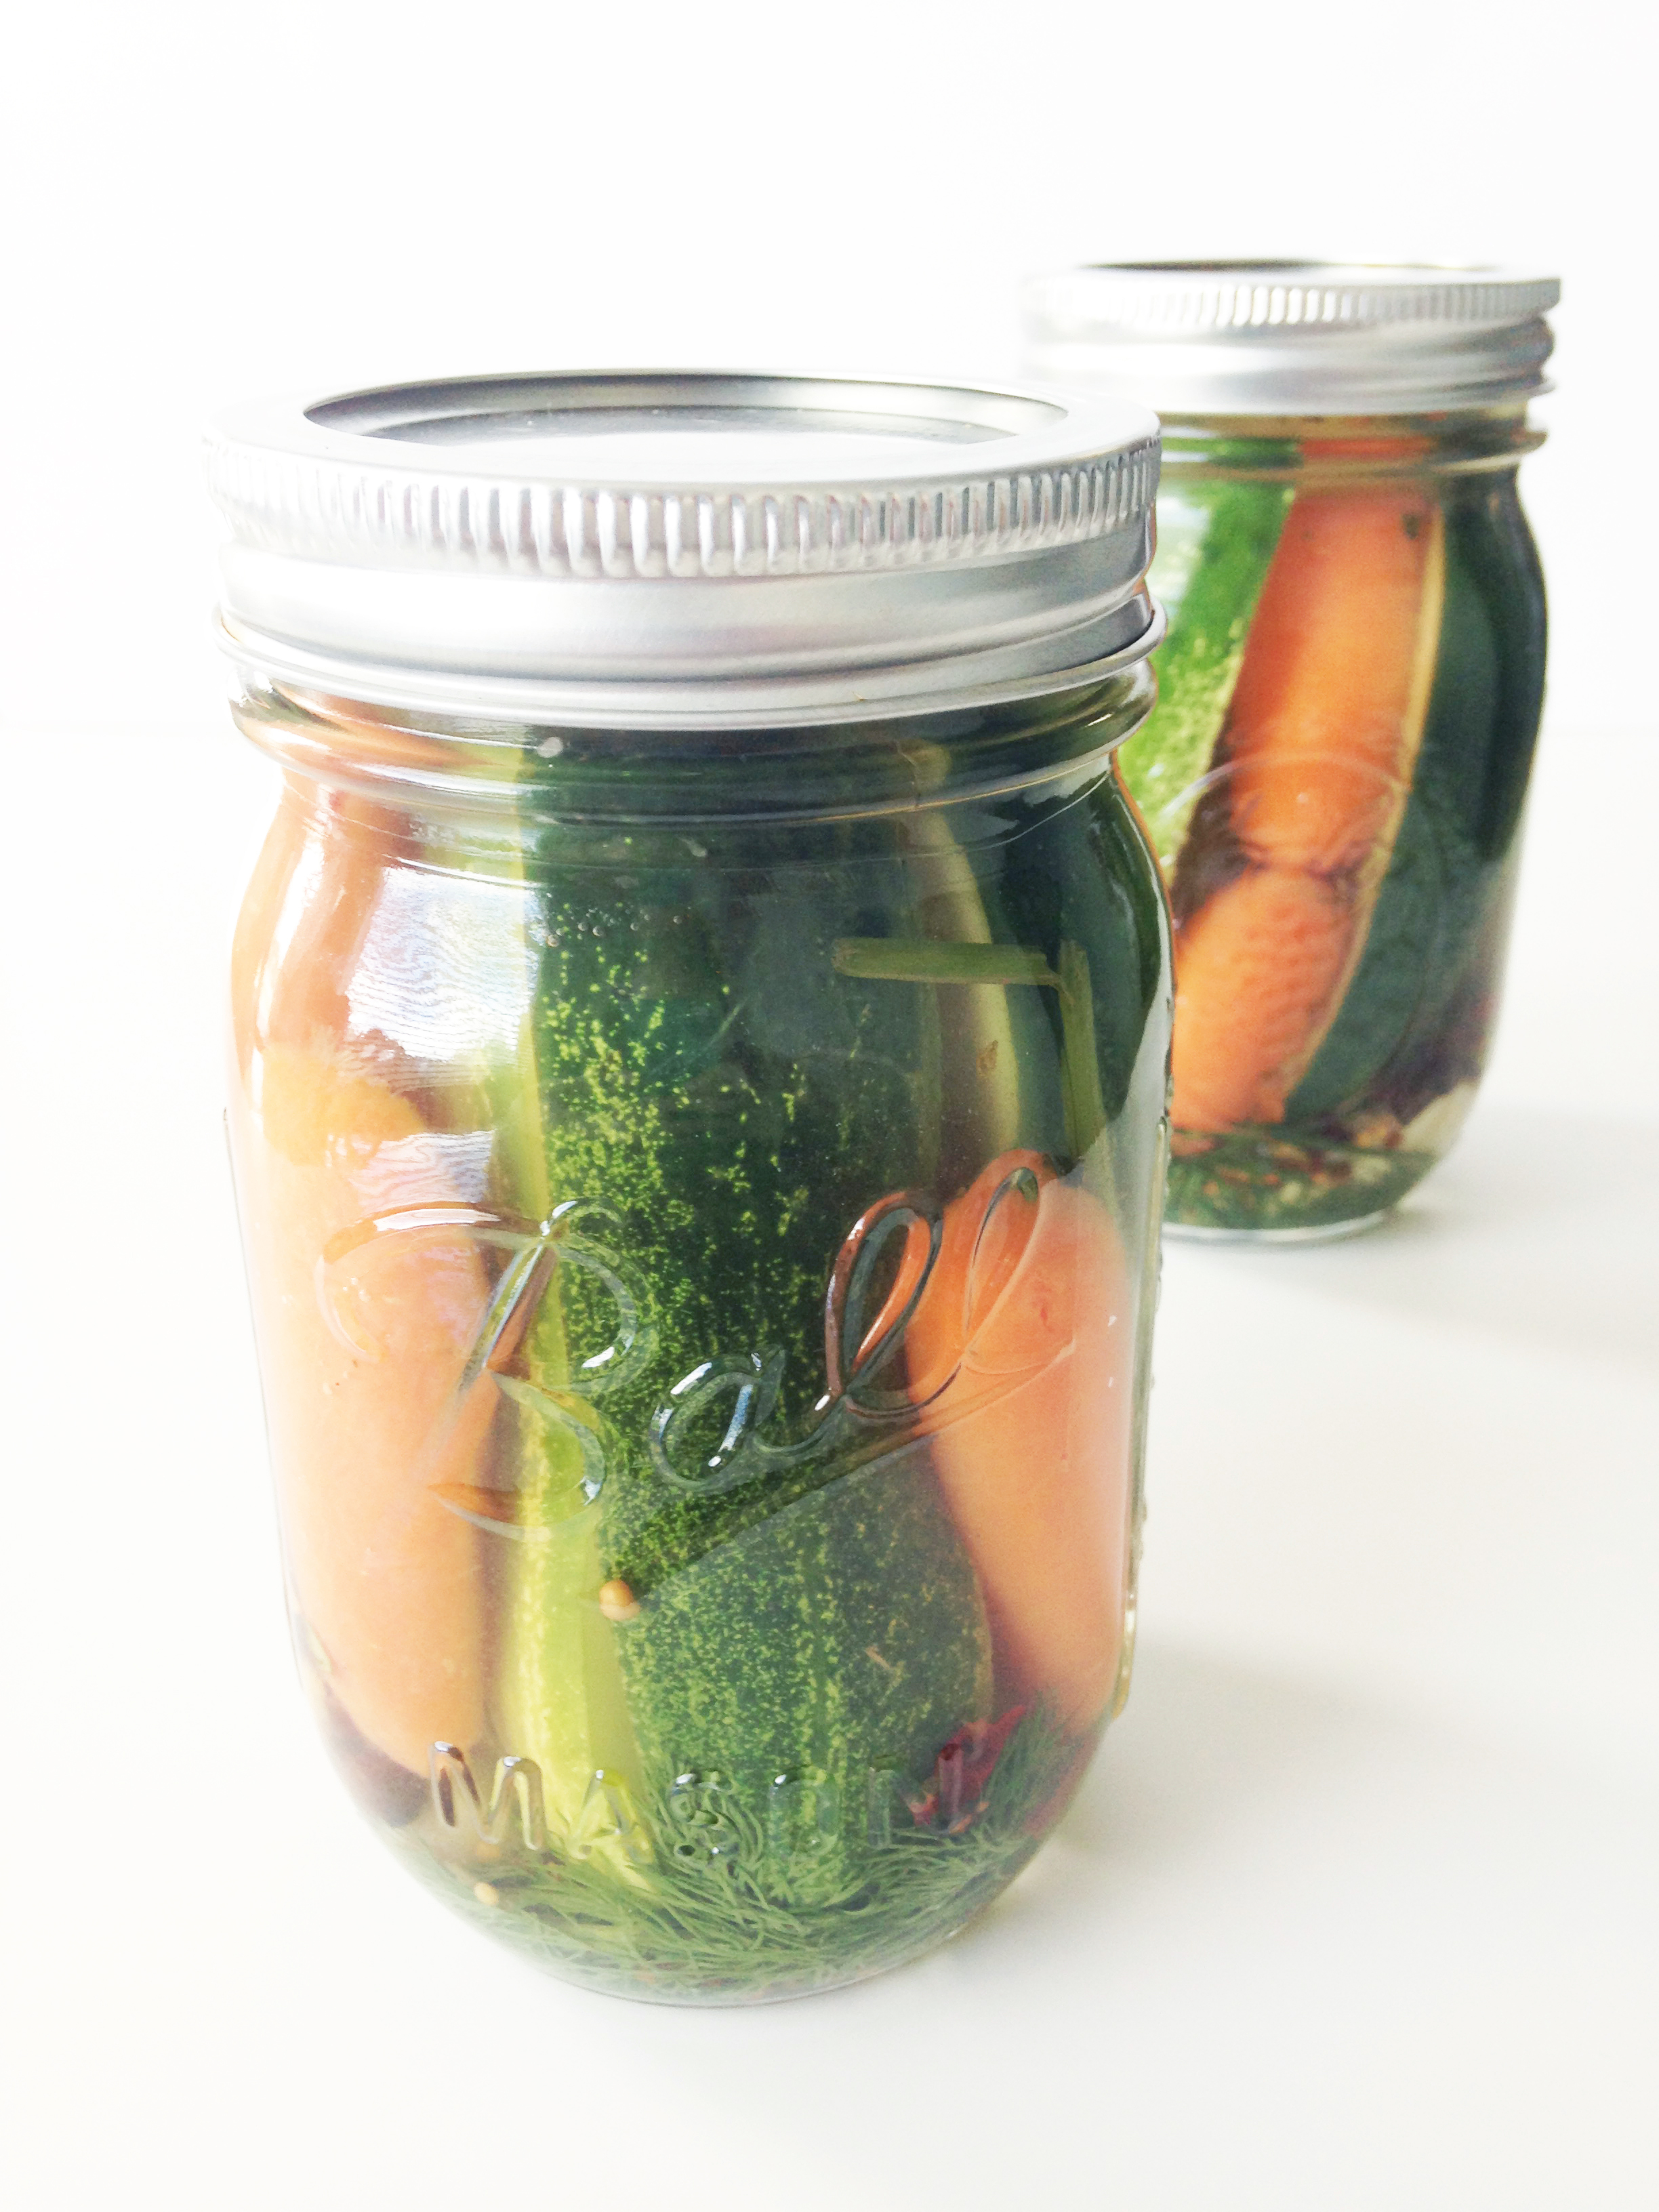 Cucamelon Pickles (Quick Refrigerator Version)